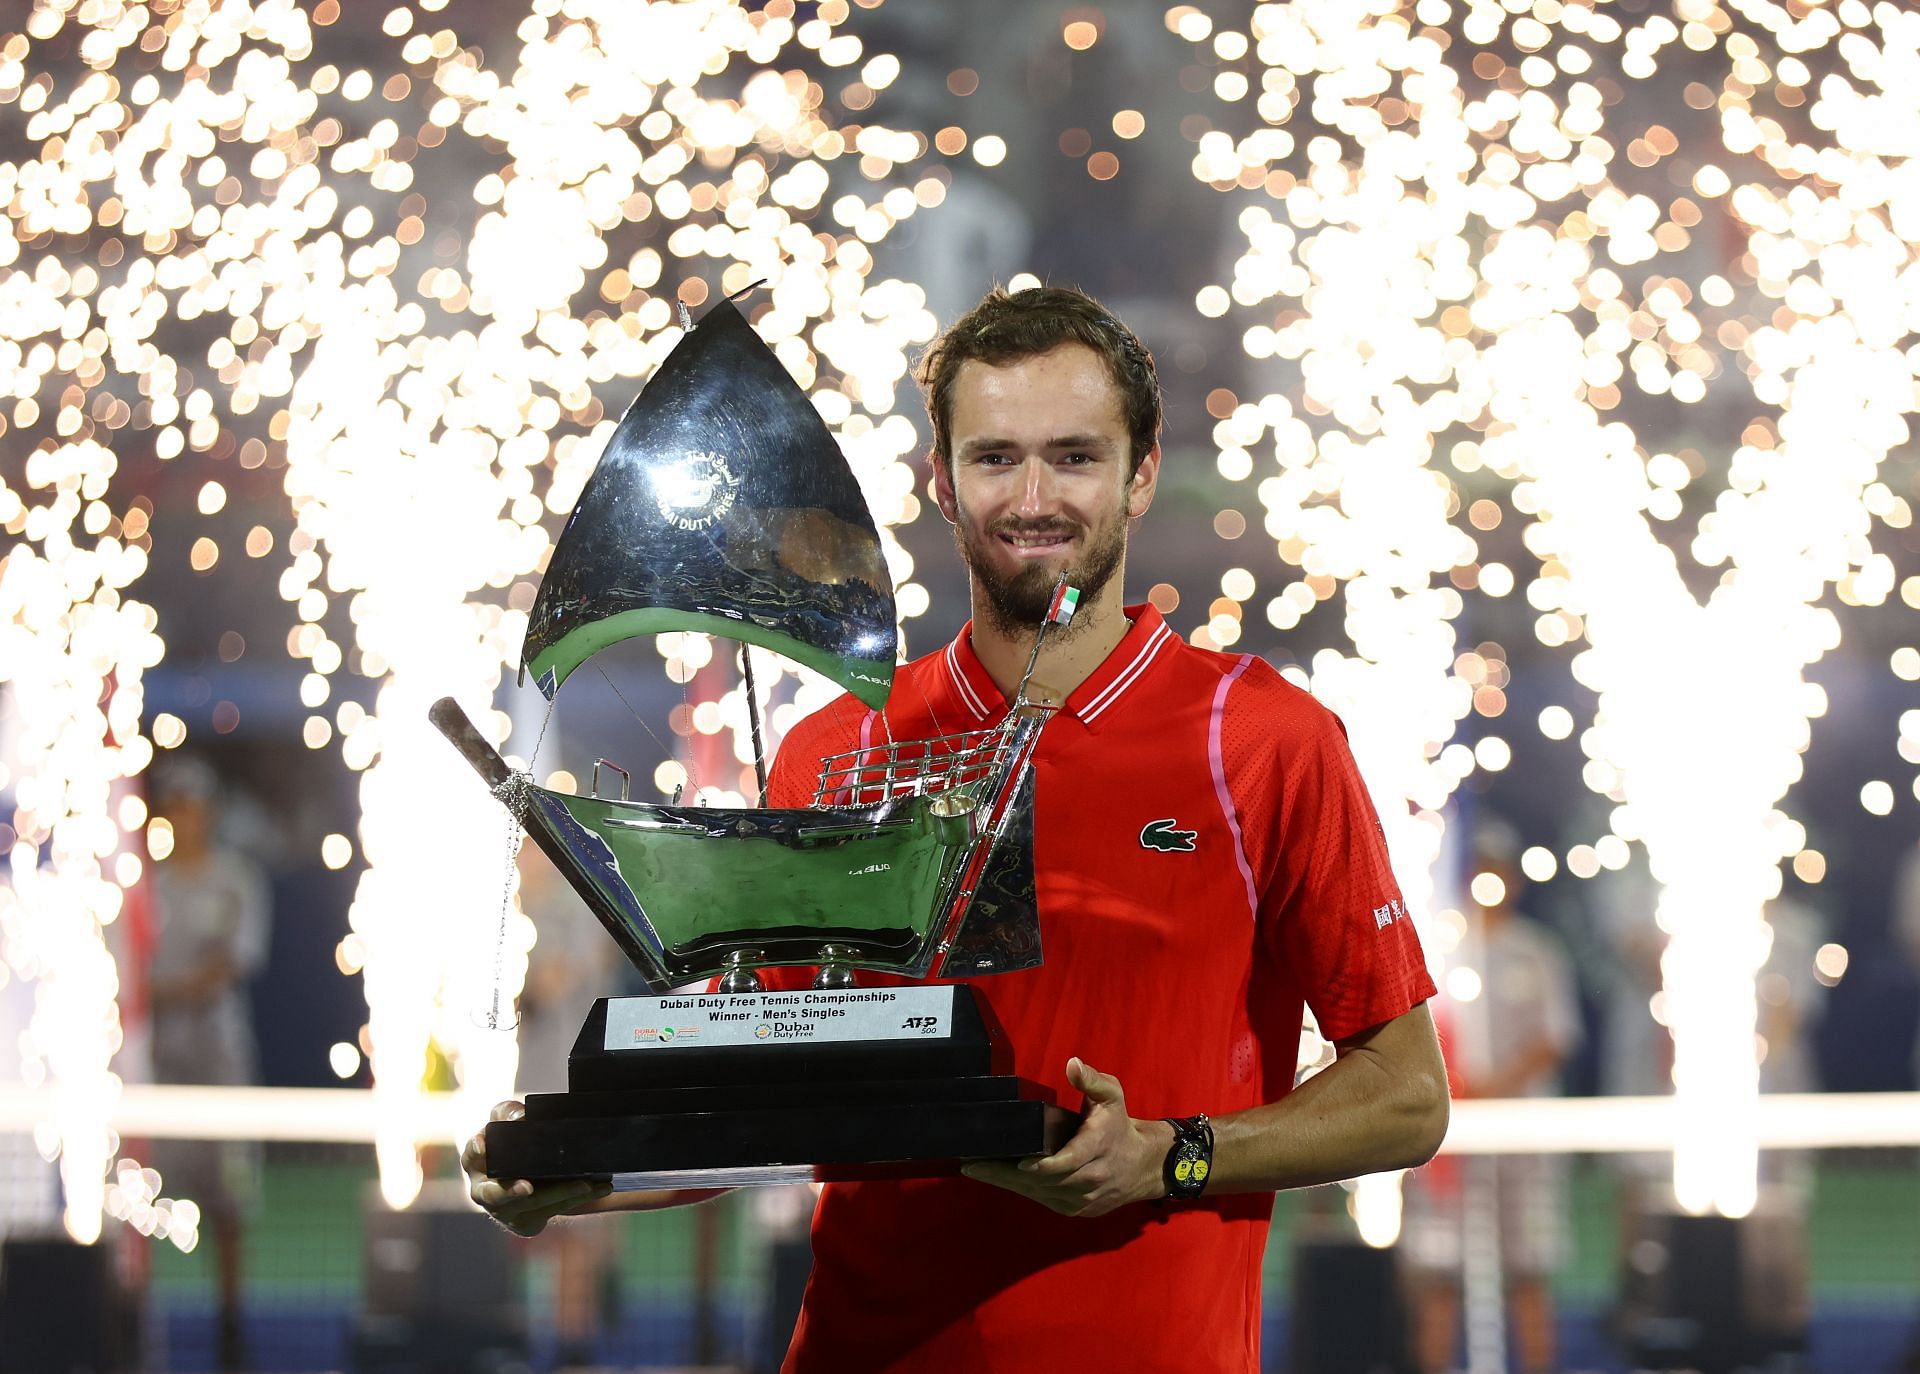 Daniil Medvedev was the champion at the 2023 Dubai Tennis Championships